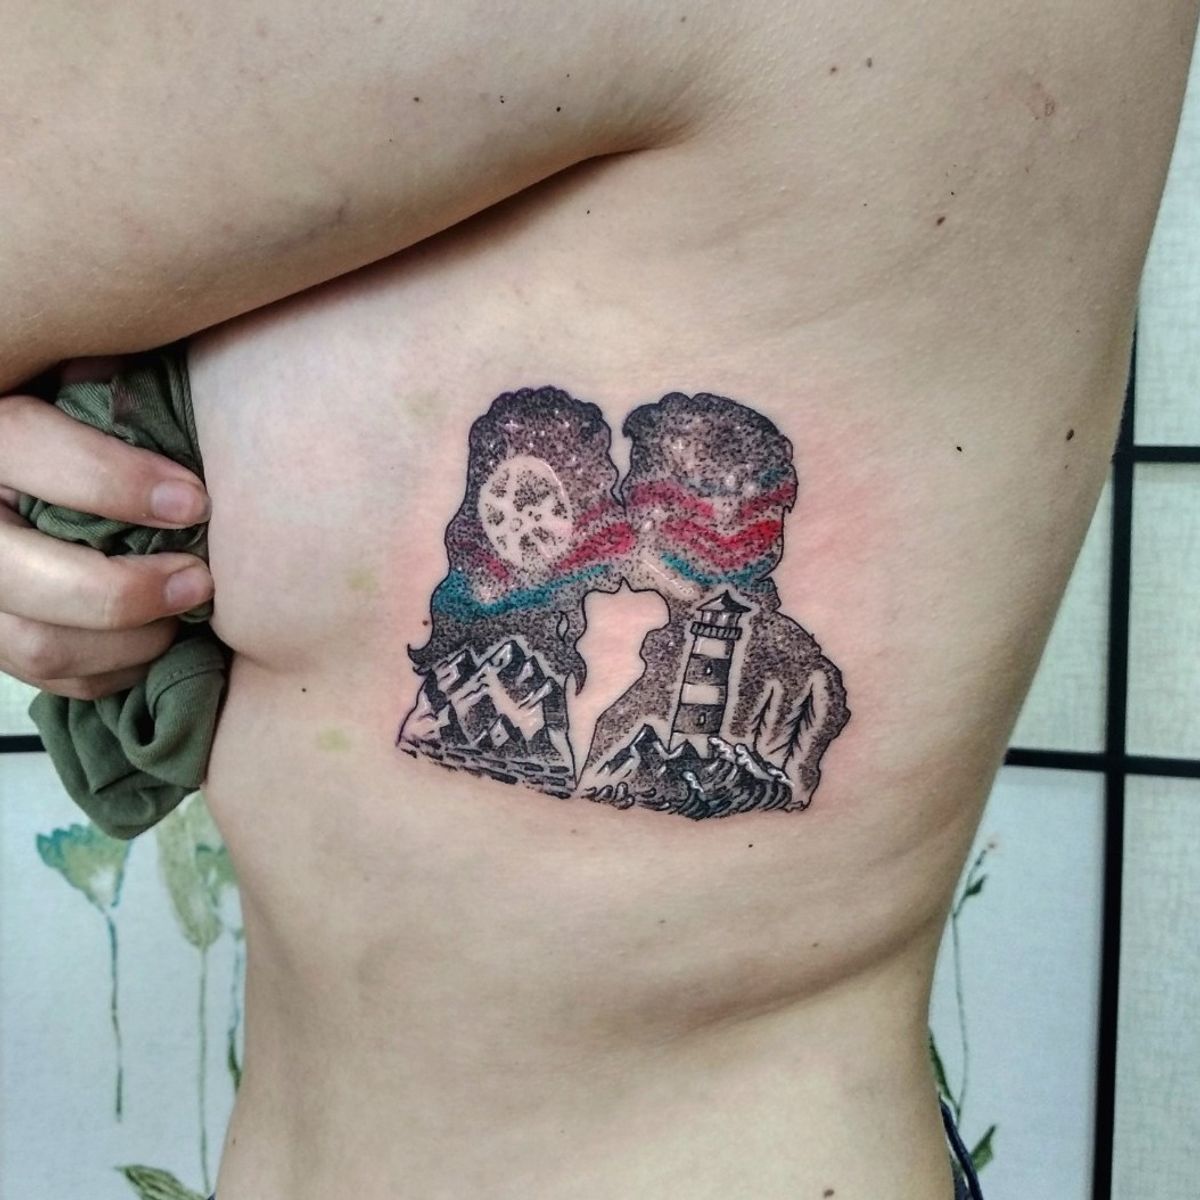 Tattoo uploaded by Артем Шустов | 18:20 pm, Dec 9th 2018 | 787236.